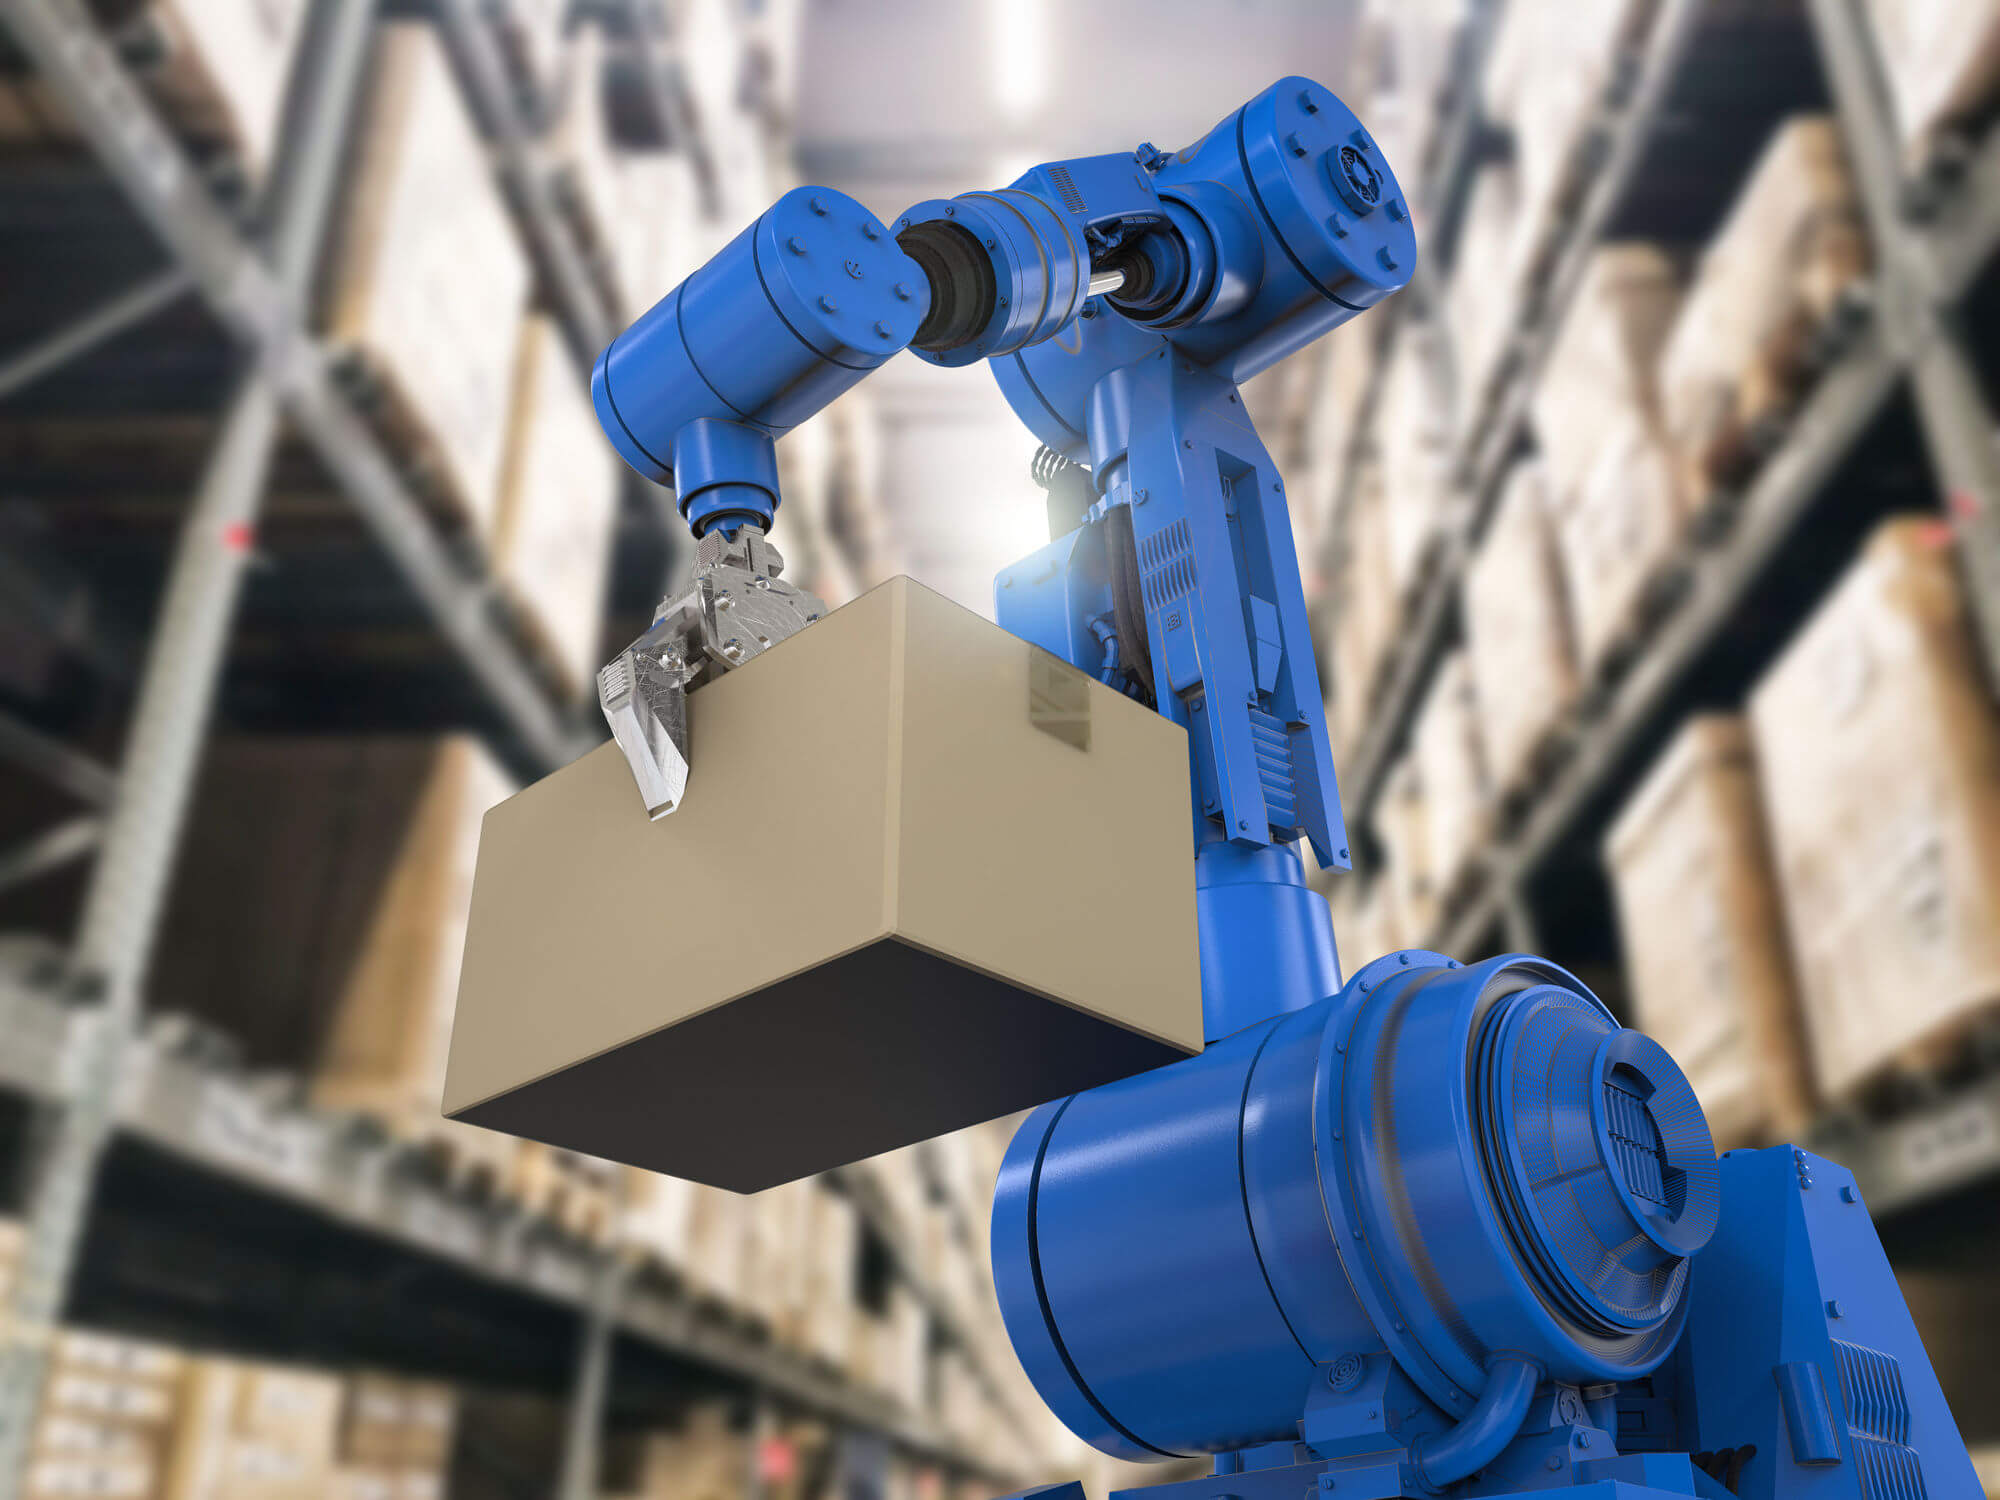 Robotic Arm in Warehouse